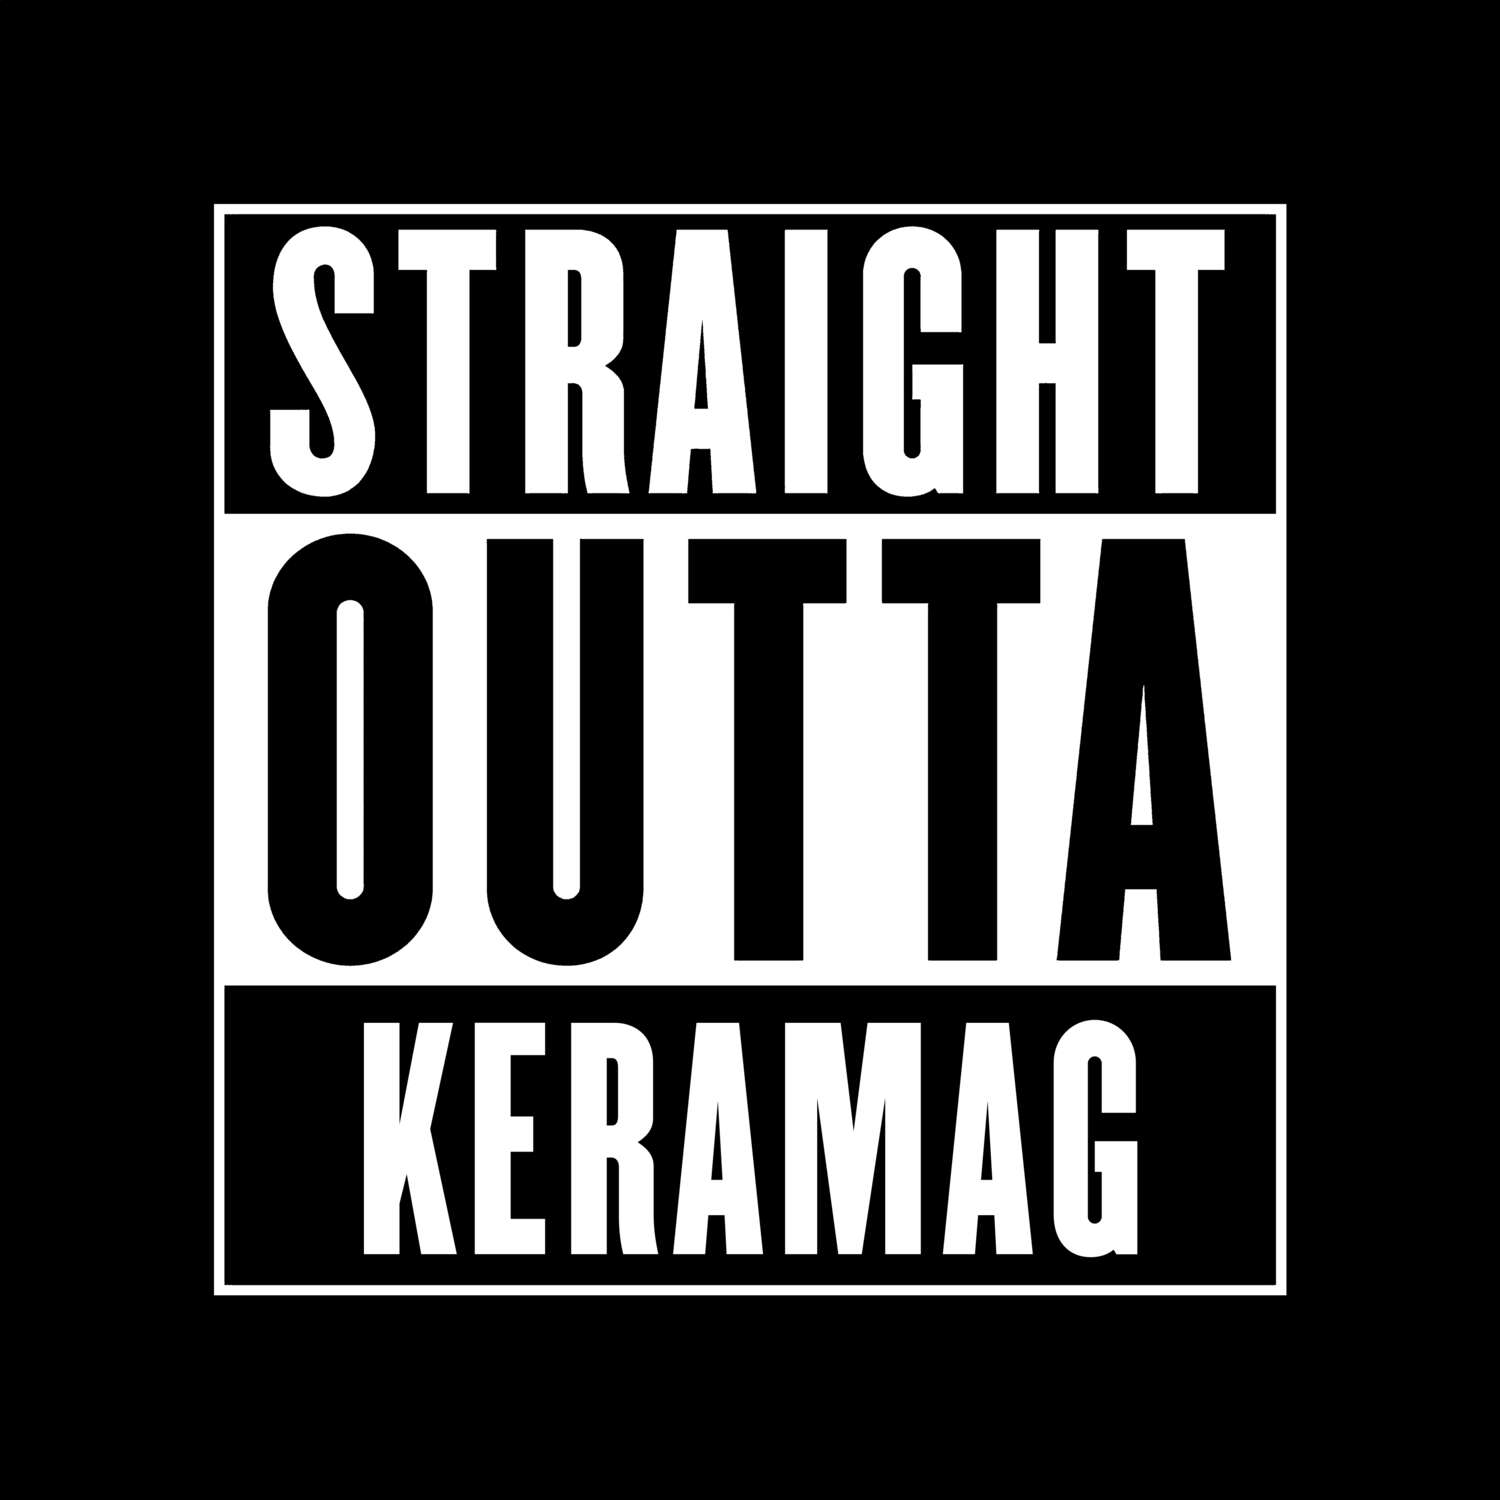 Keramag T-Shirt »Straight Outta«